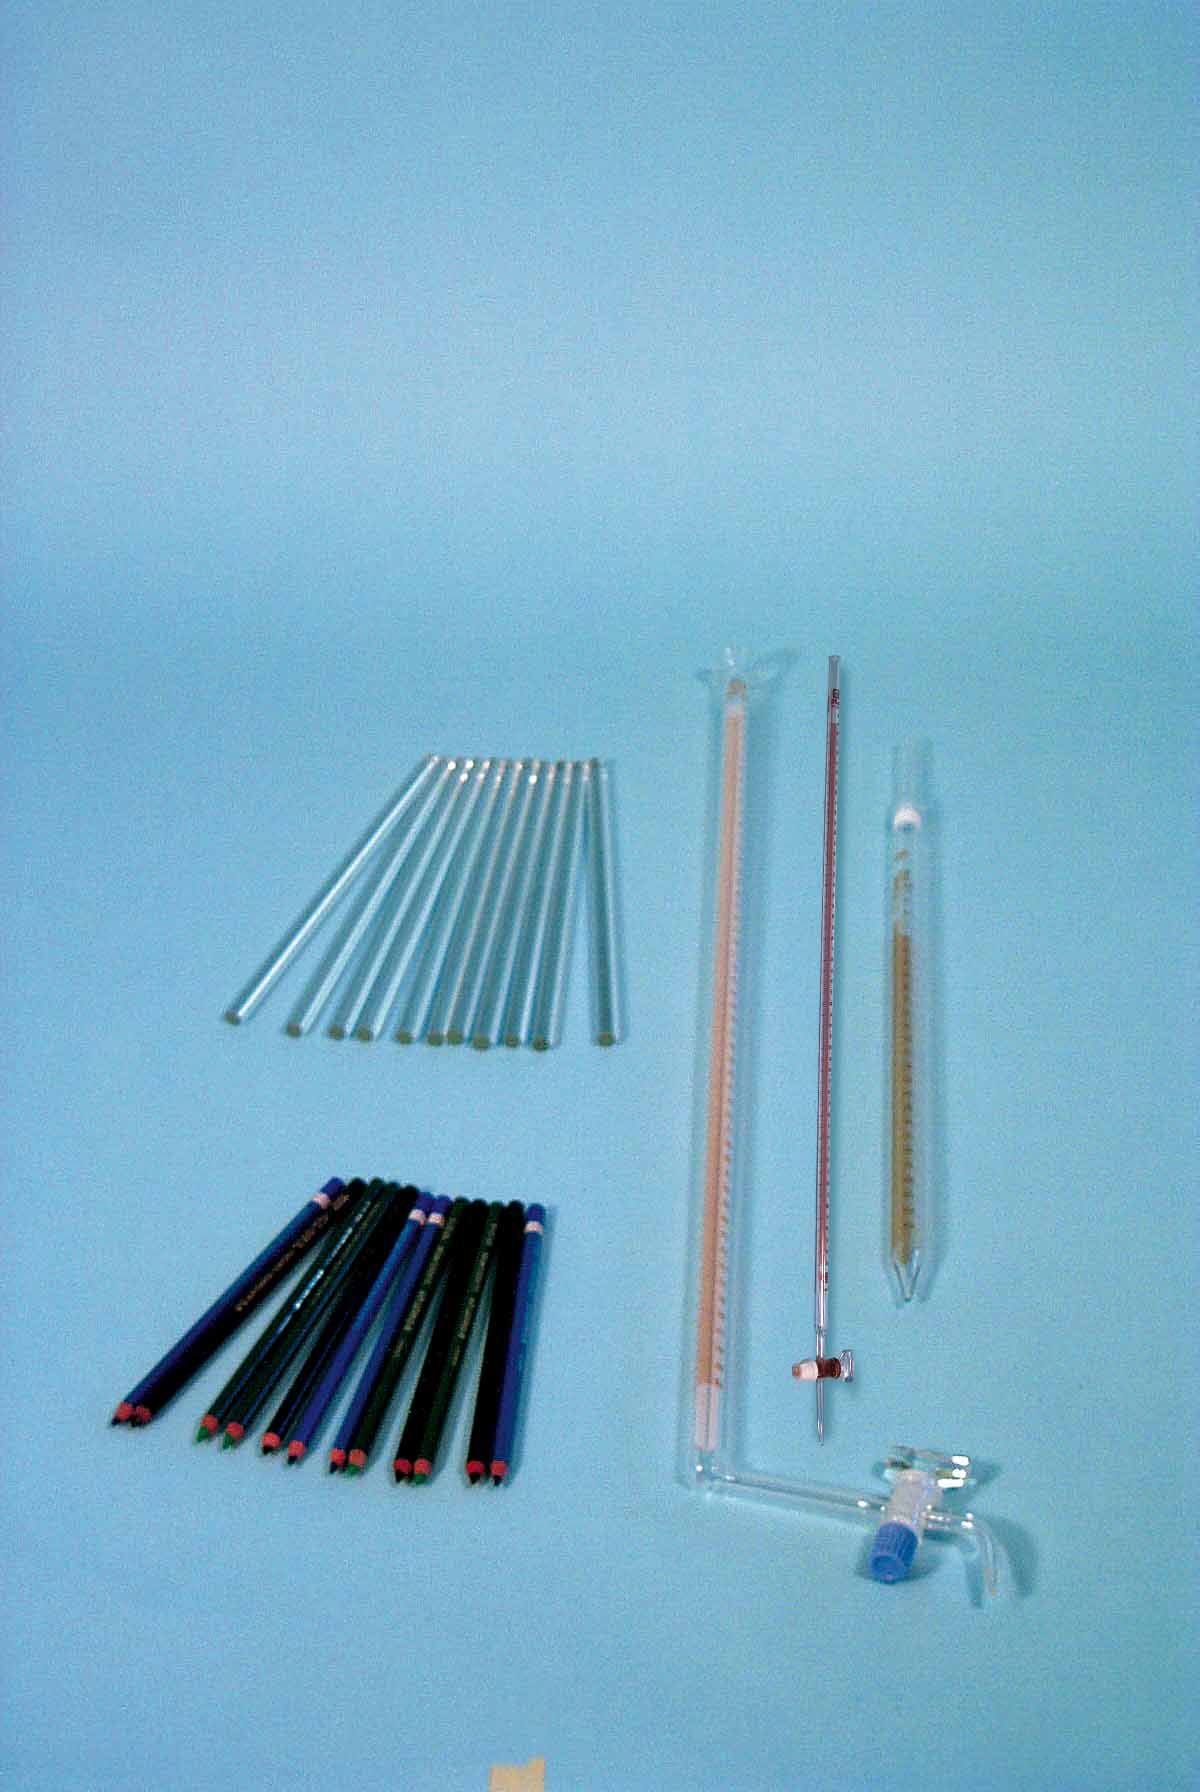 Mohr measuring pipettes